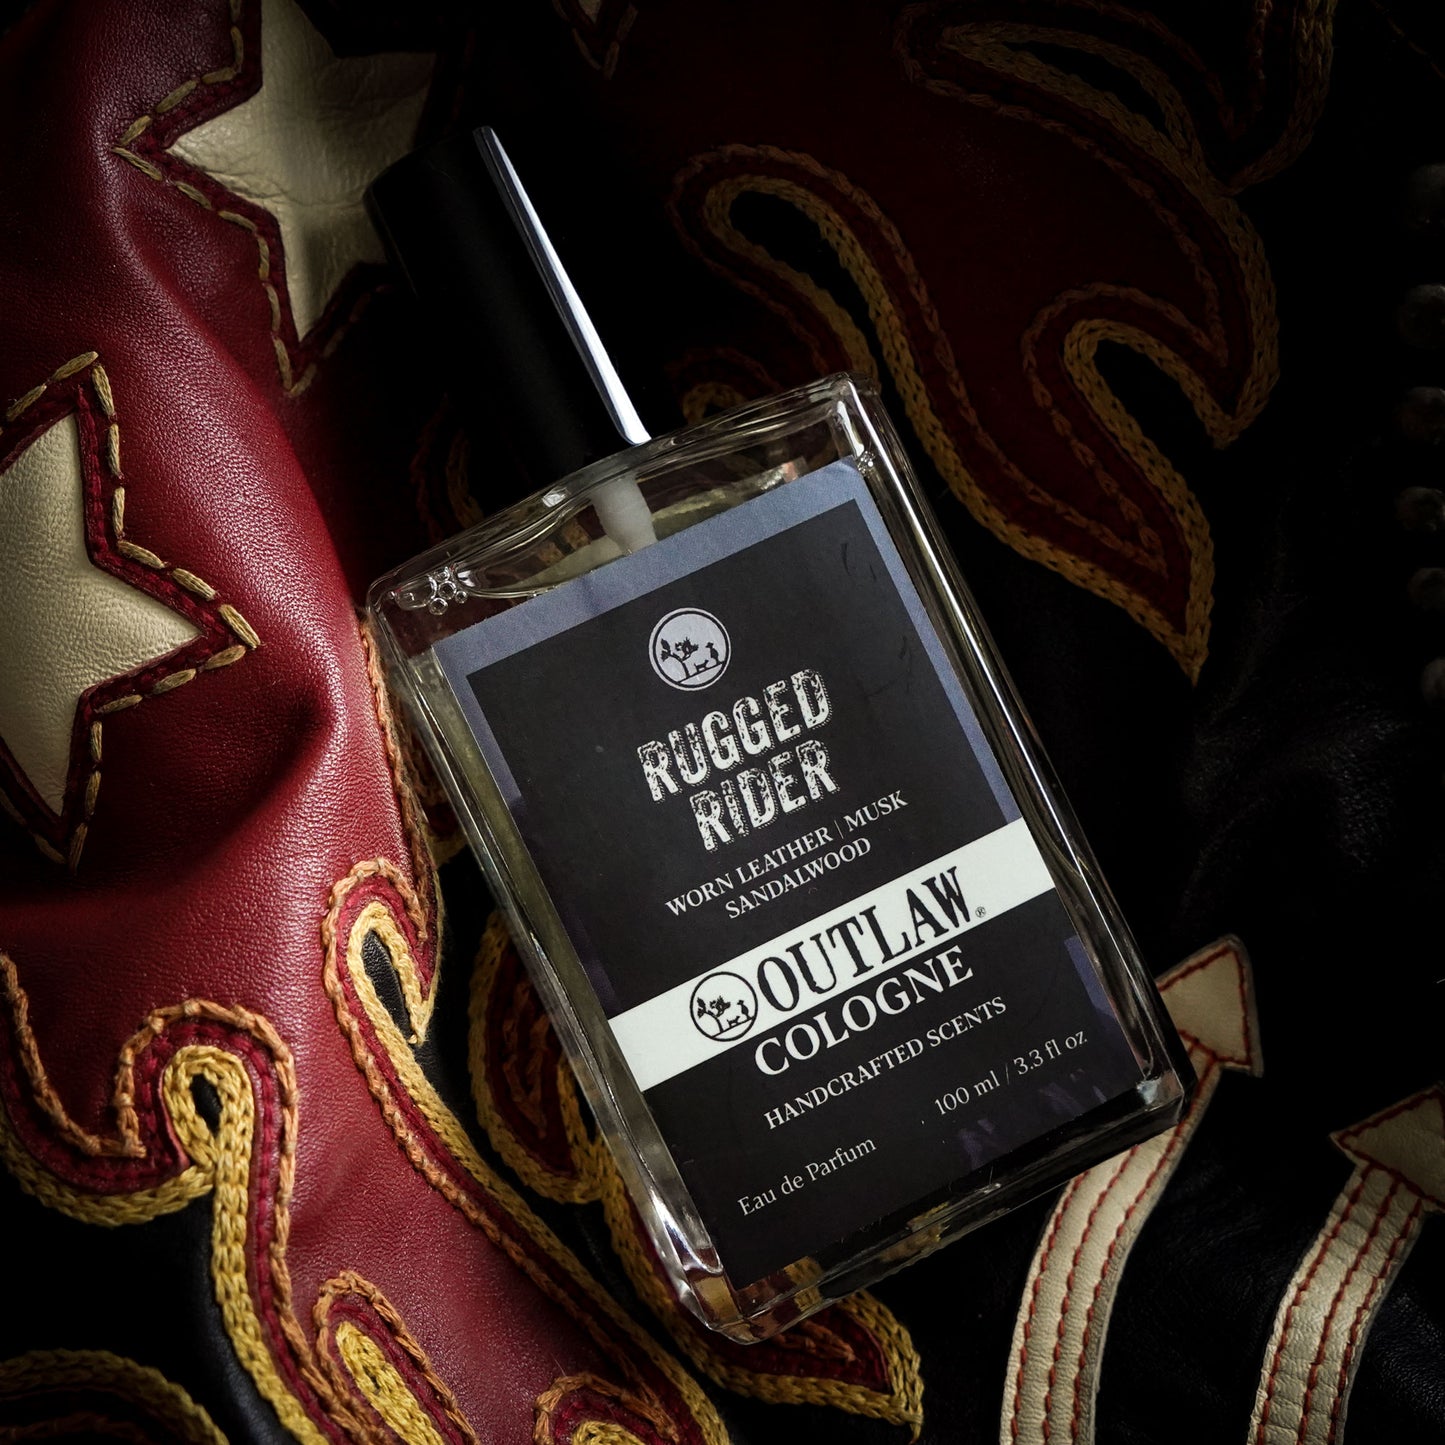 kanho leather scent man relax fragrance